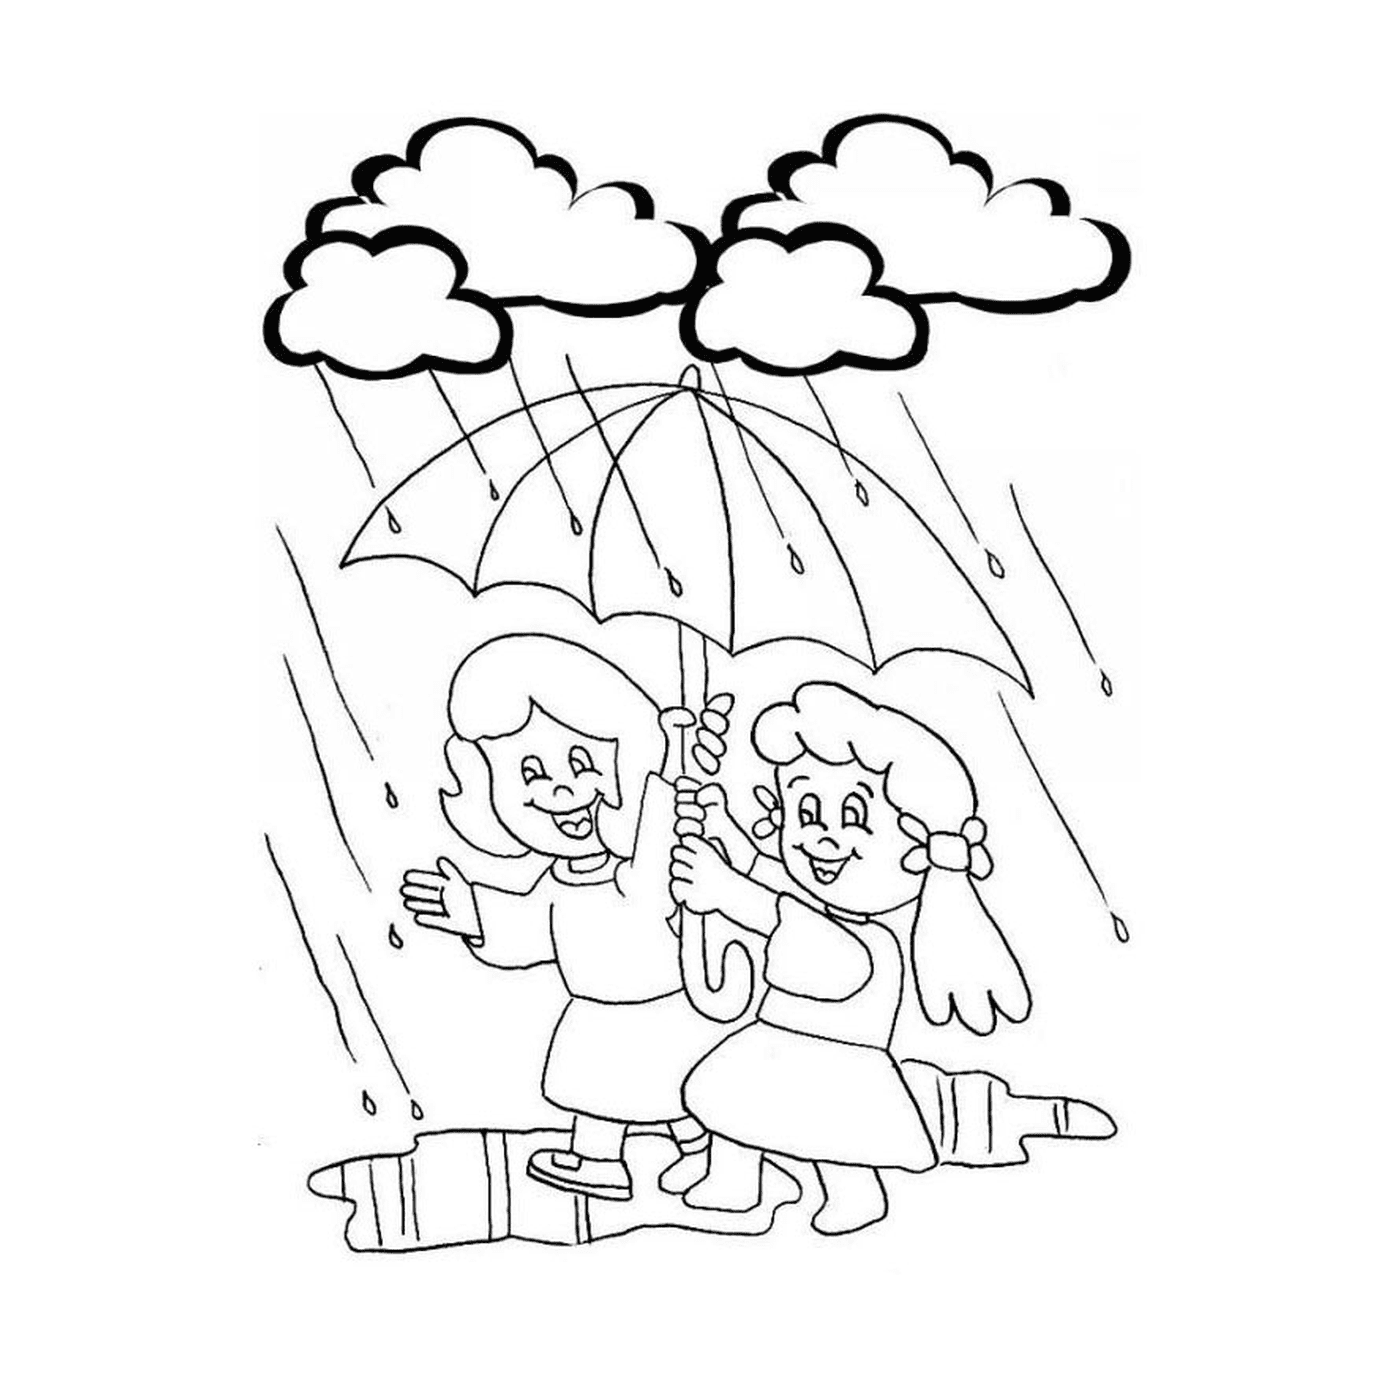  Two girls under an umbrella in the rain 